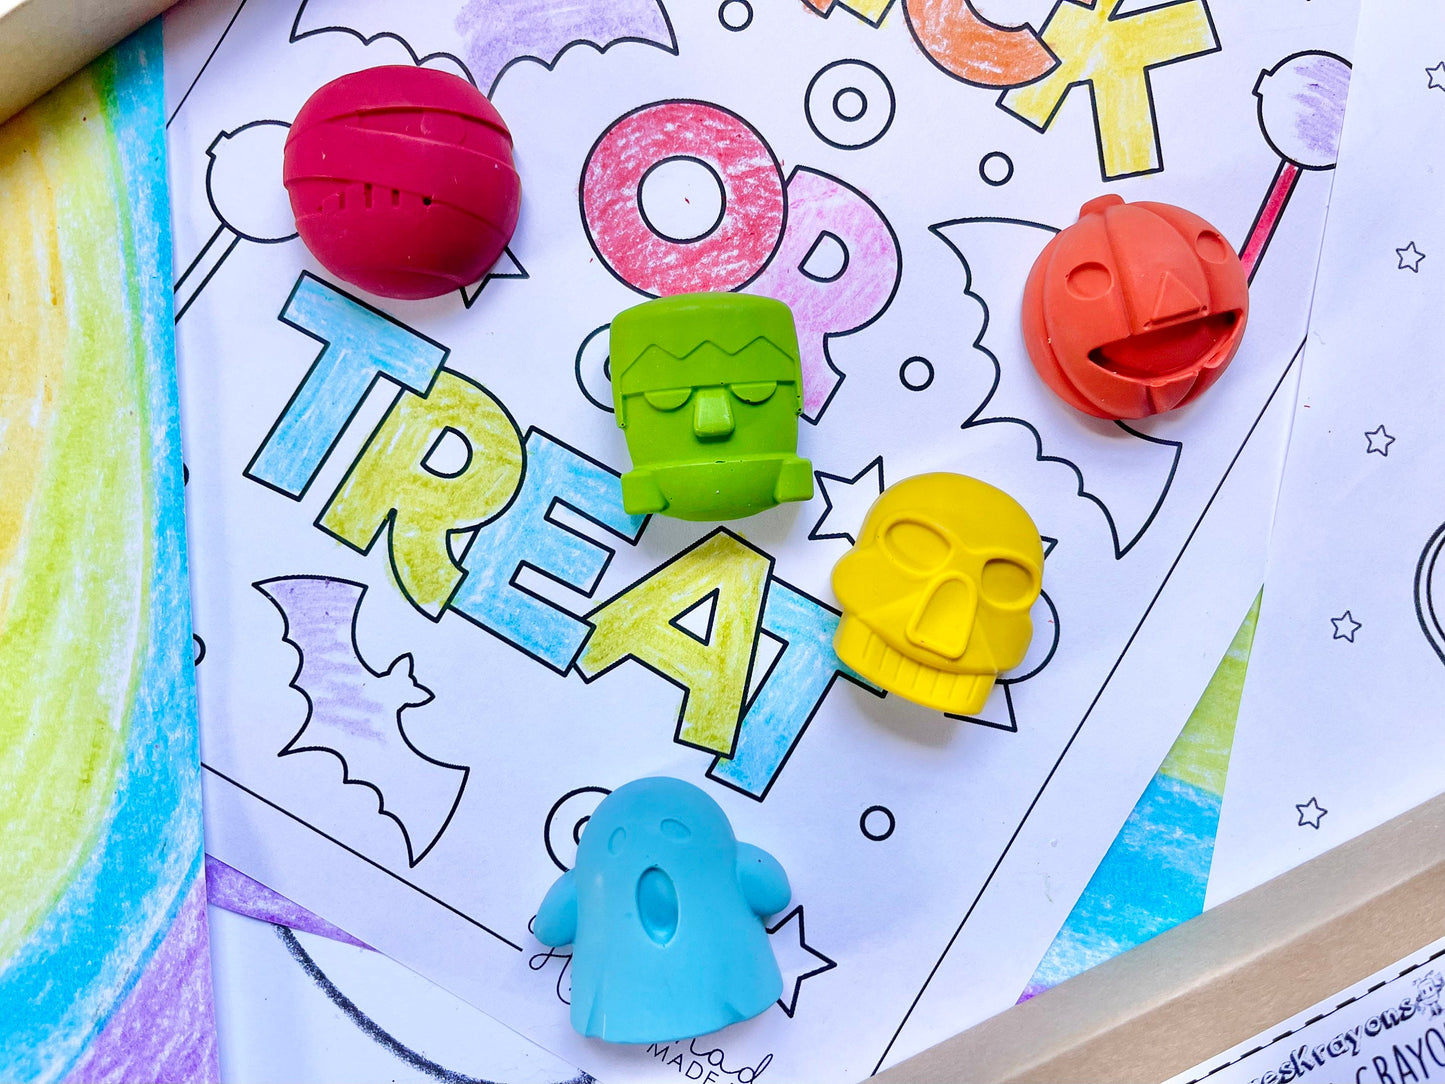 Halloween Crayons - Kids Halloween Gifts - Halloween Gifts For Kids - Boo Basket Fillers - Gifts For Kids - Kids Gifts - Halloween Treats